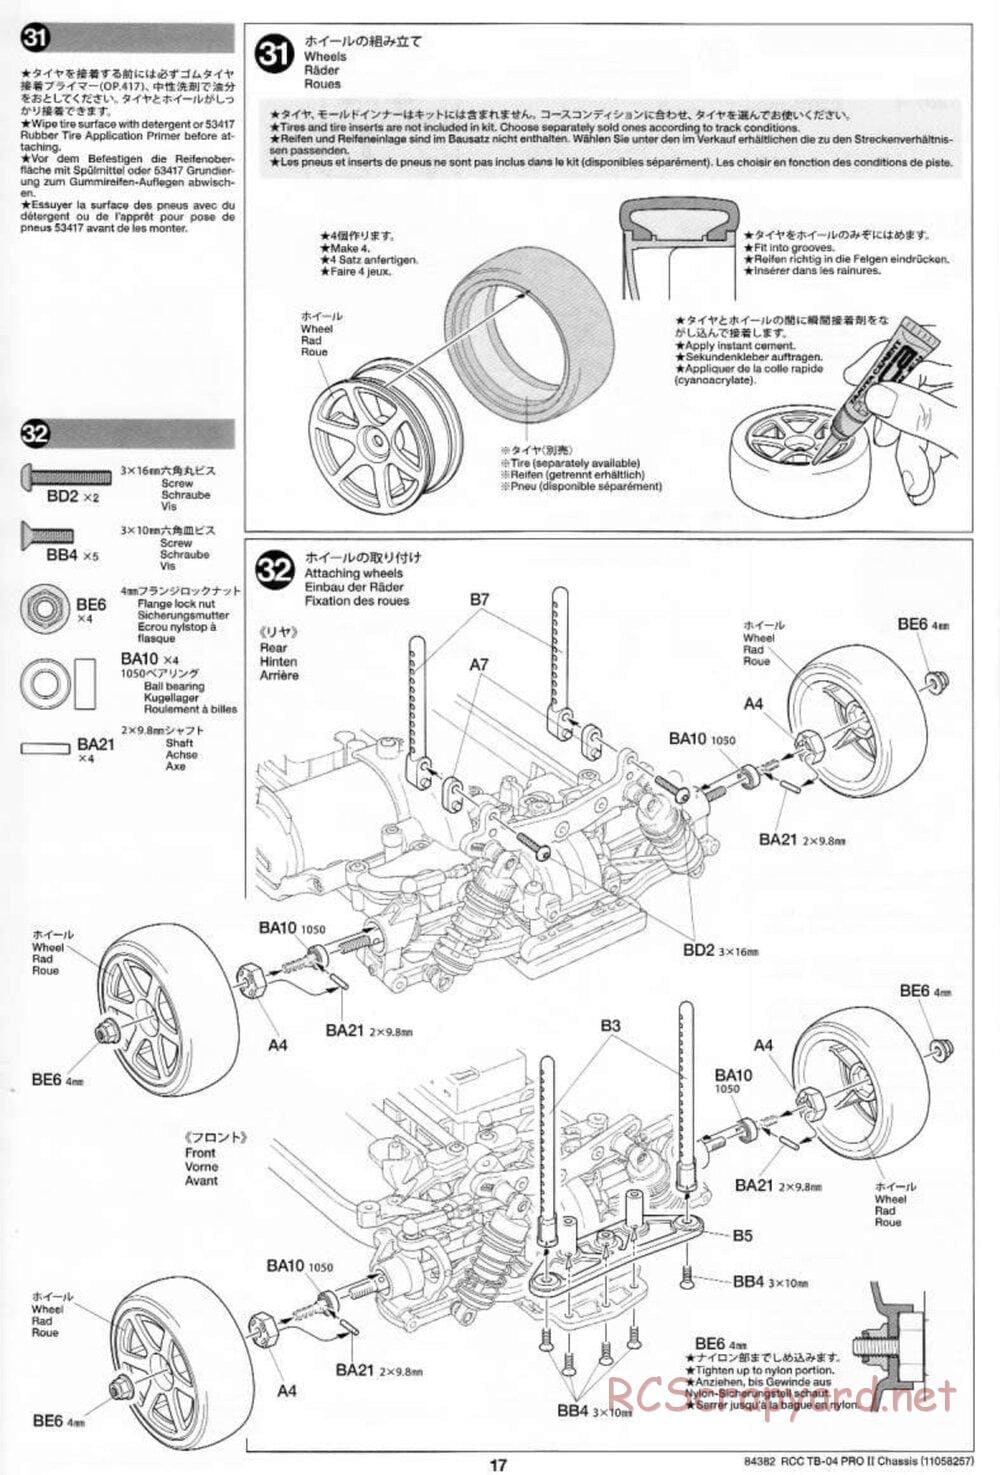 Tamiya - TB-04 Pro II Chassis - Manual - Page 17